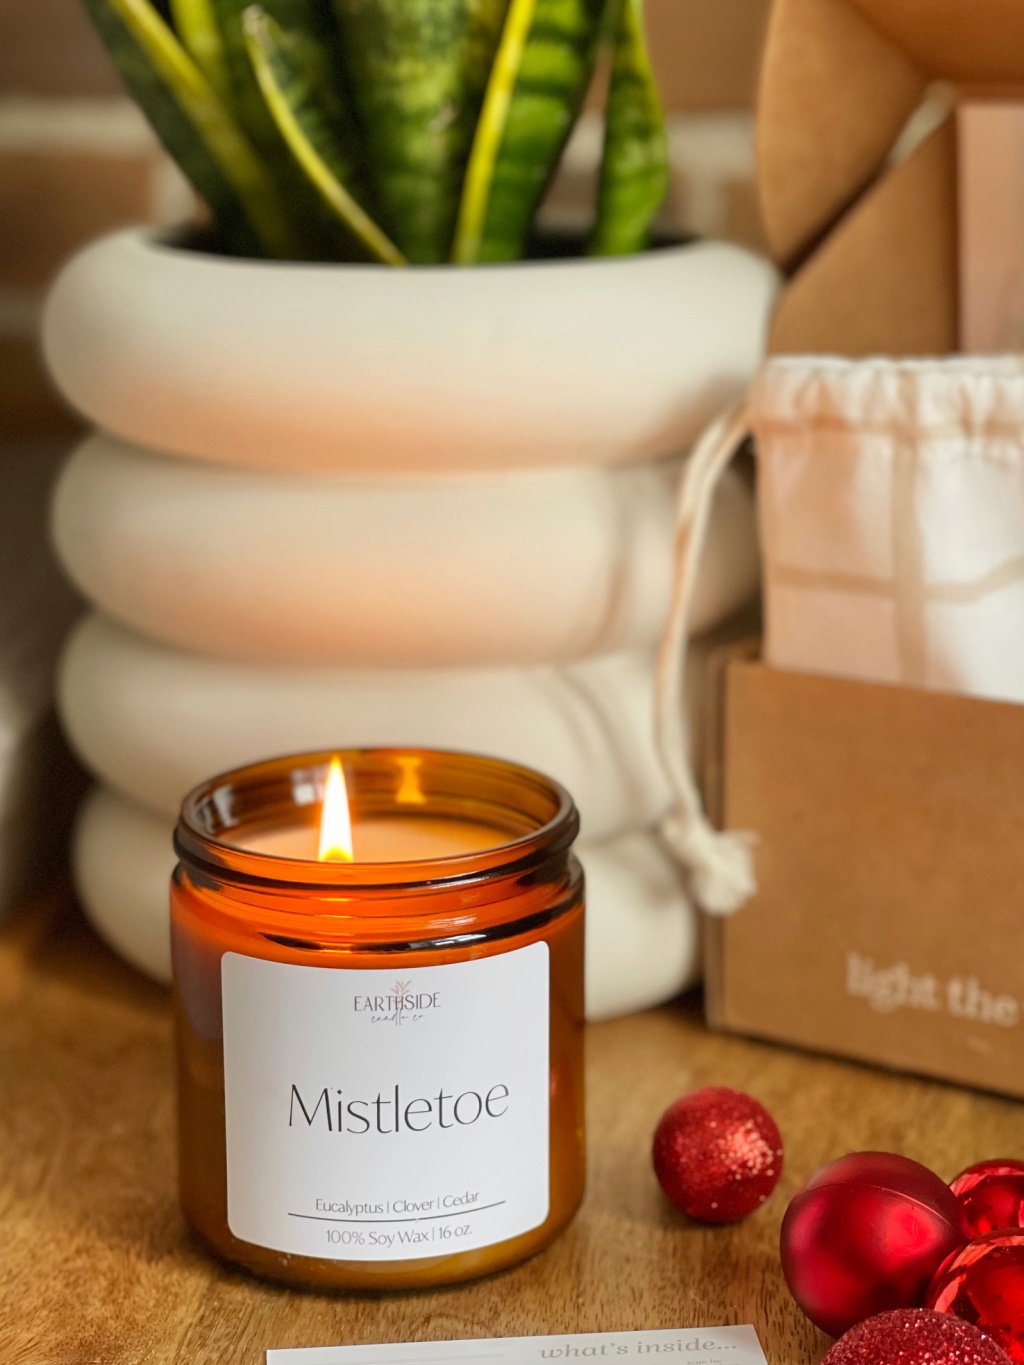 An all-natural candle subscription service: Vellabox December 2021